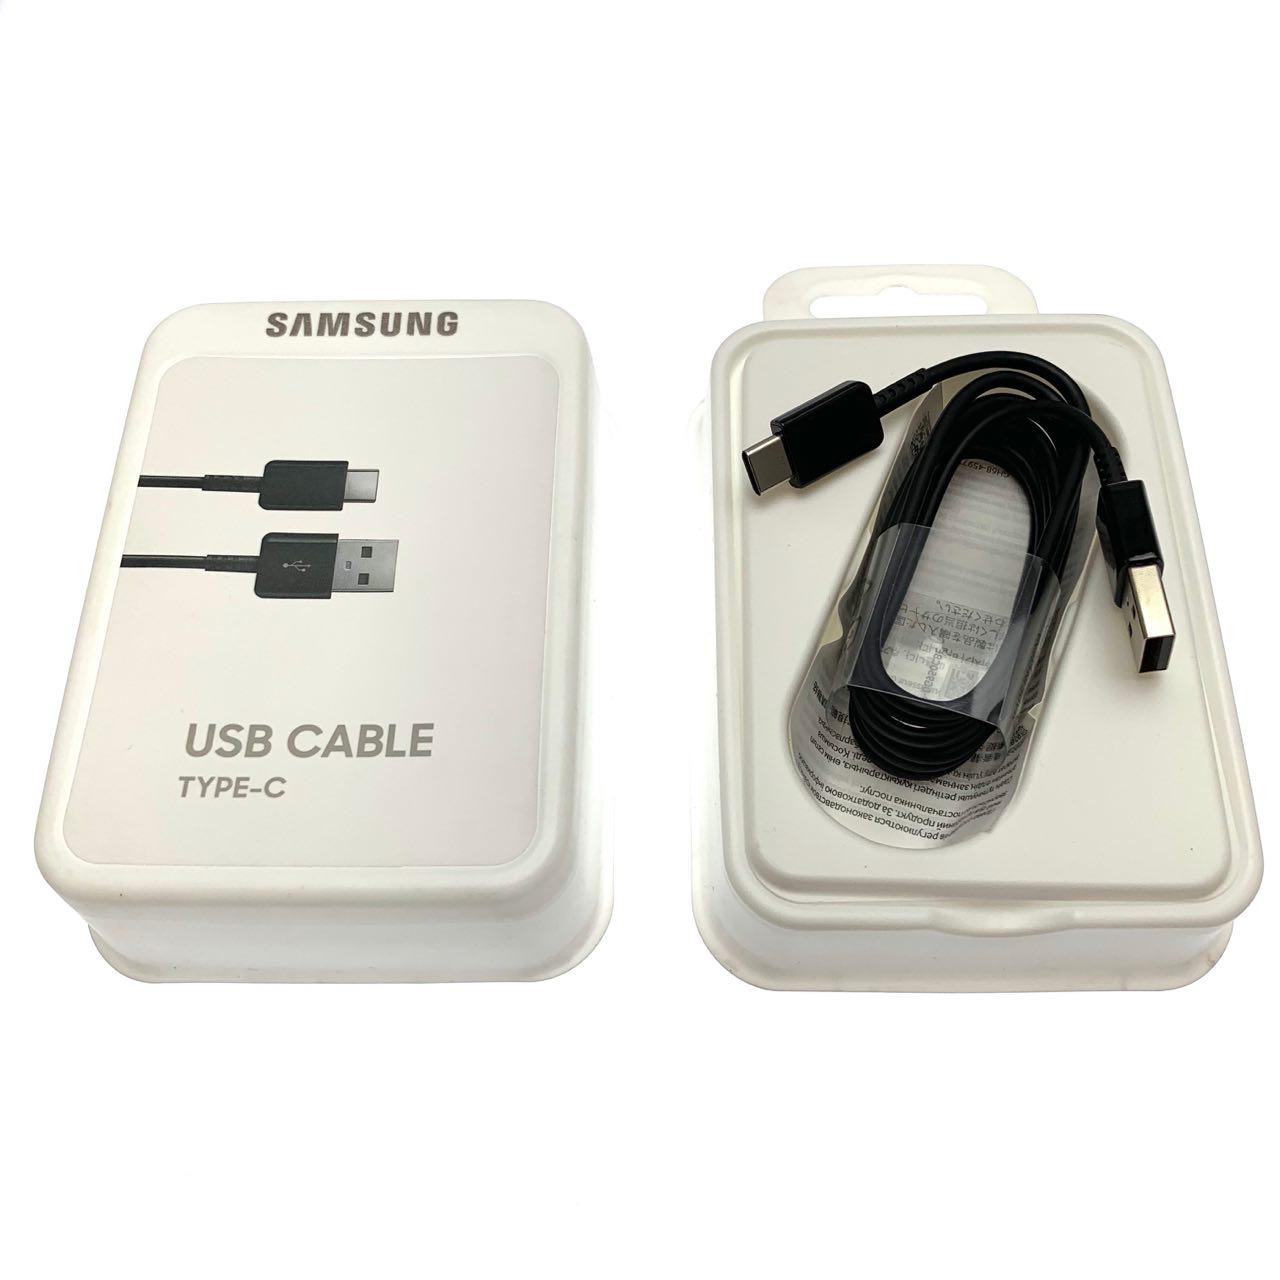 Дата-кабель Samsung USB - USB Type-C, 1.5 м, EP-DG930DWEGWW, цвет чёрный.